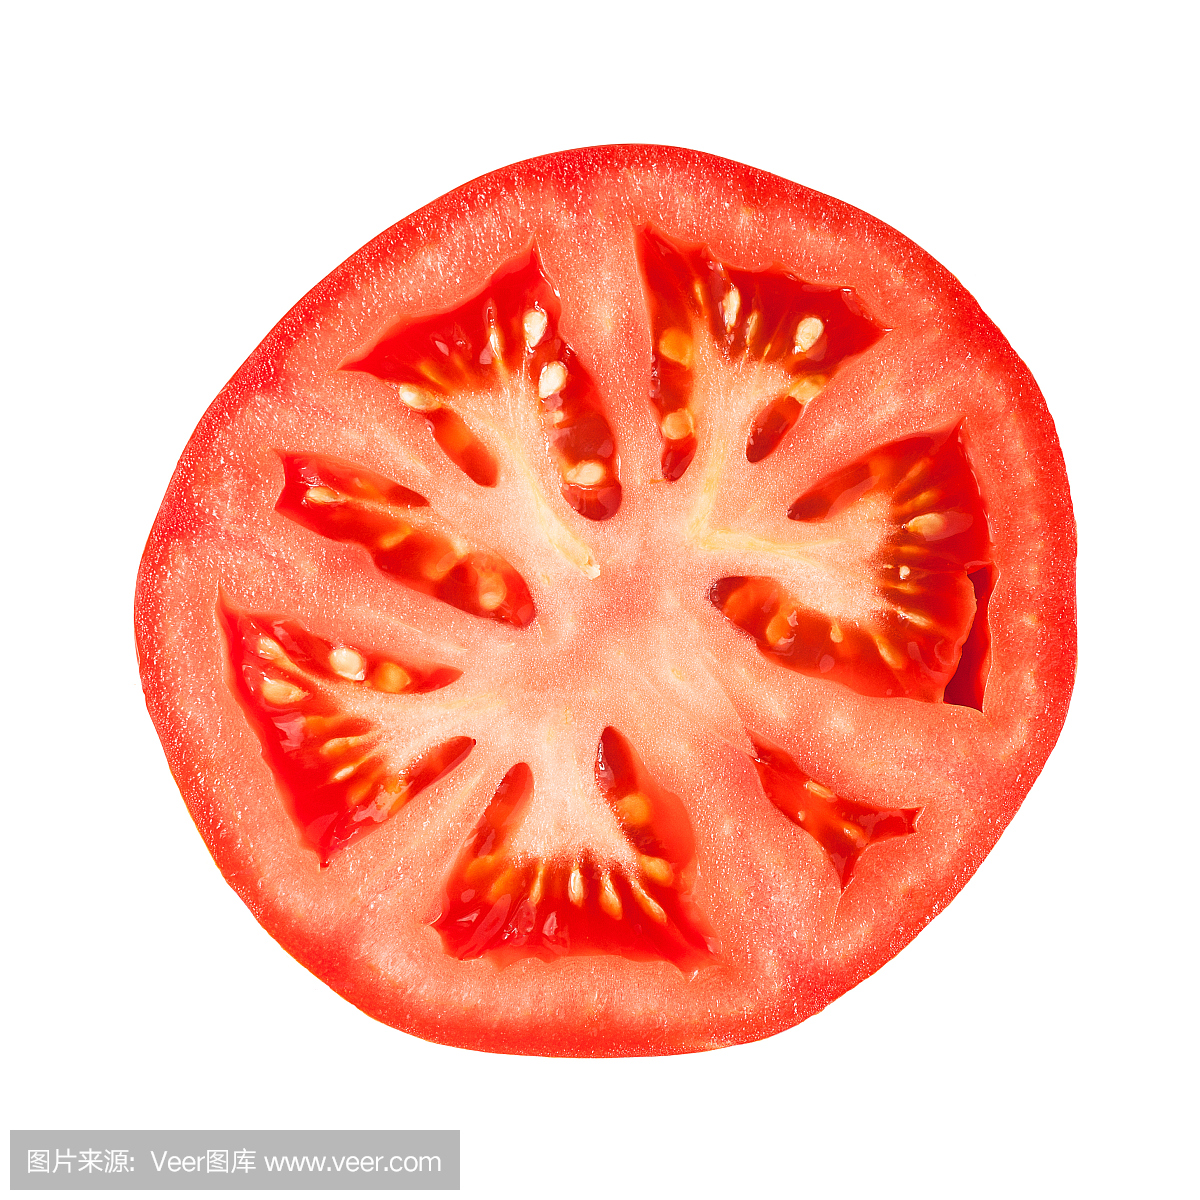 Detail of tomato slice on white background